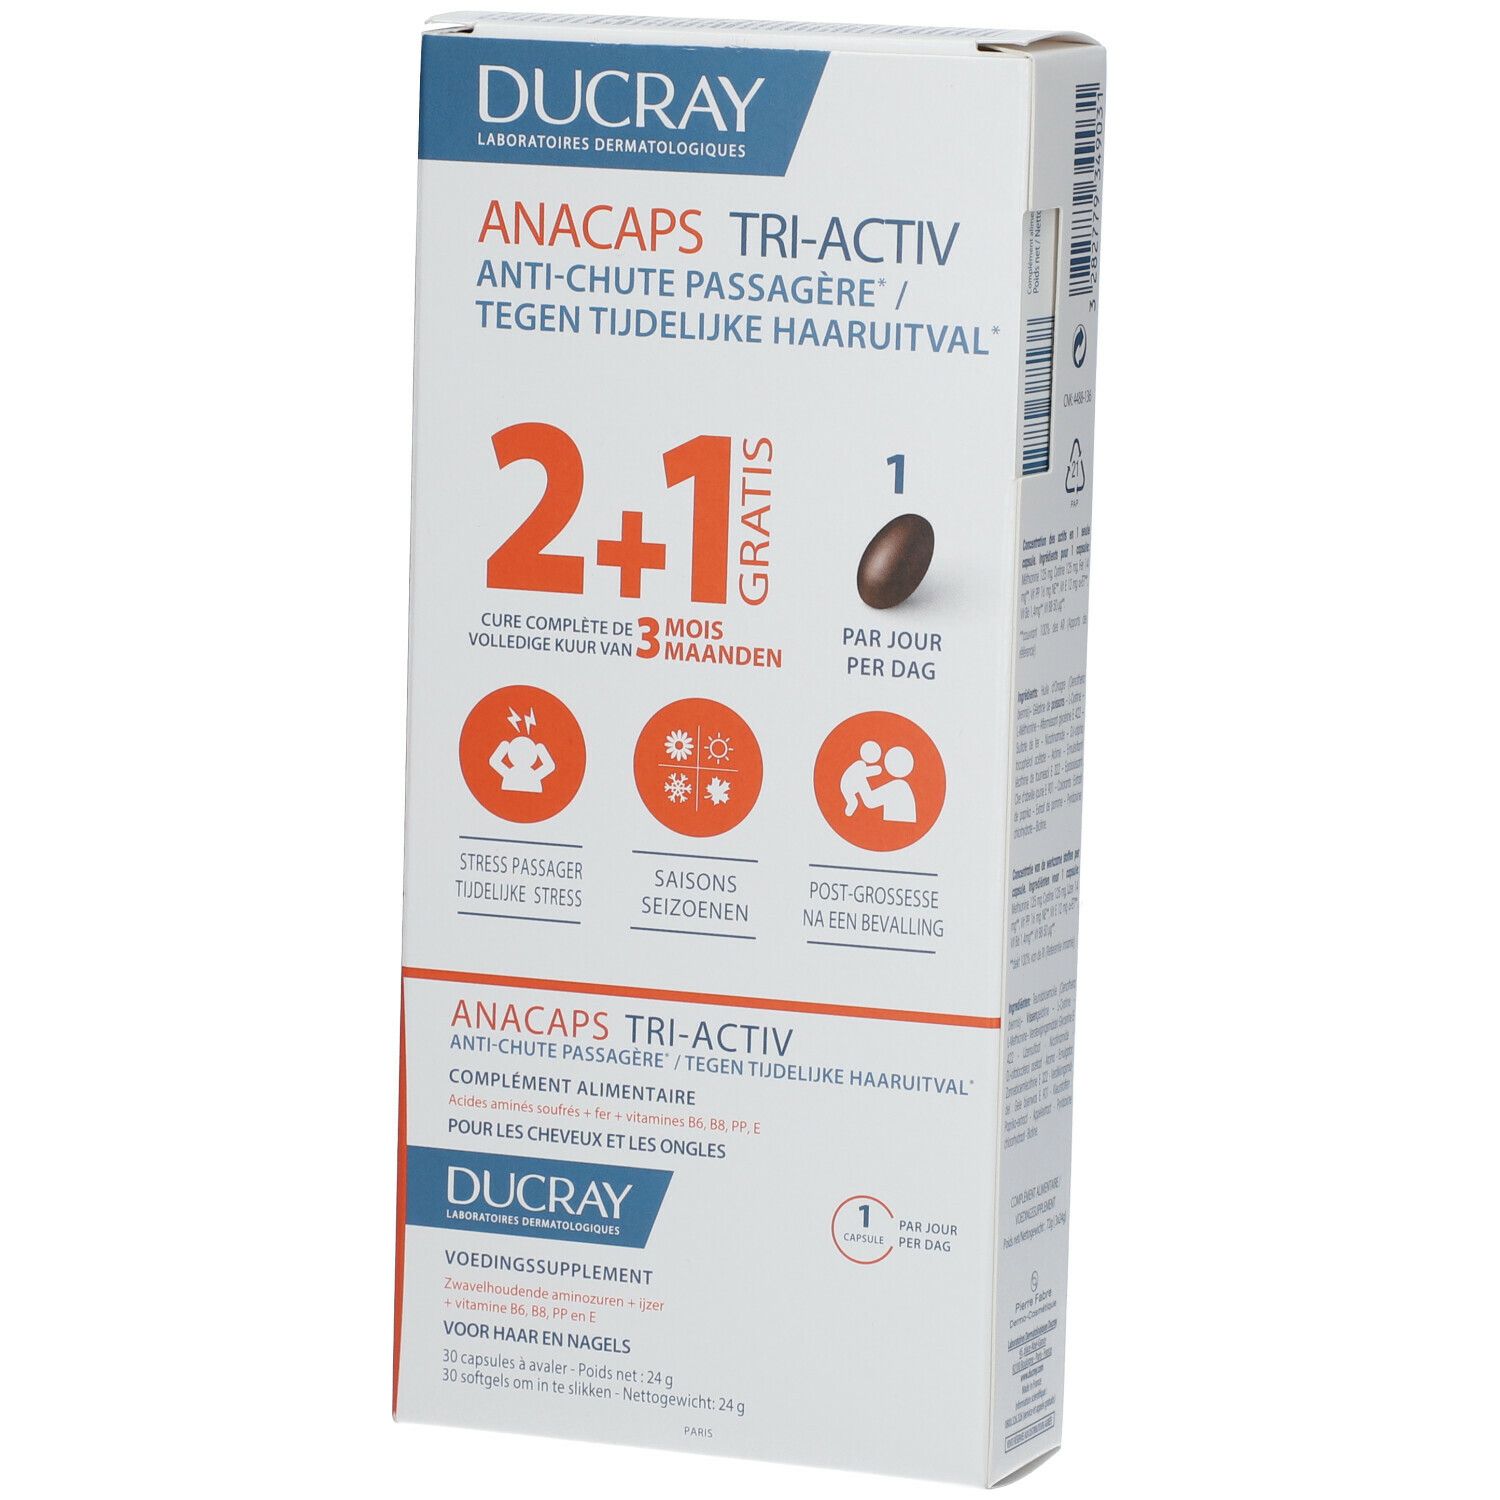 Ducray Anacaps Tri-Activ tegen Tijdelijke Haaruitval TRIO